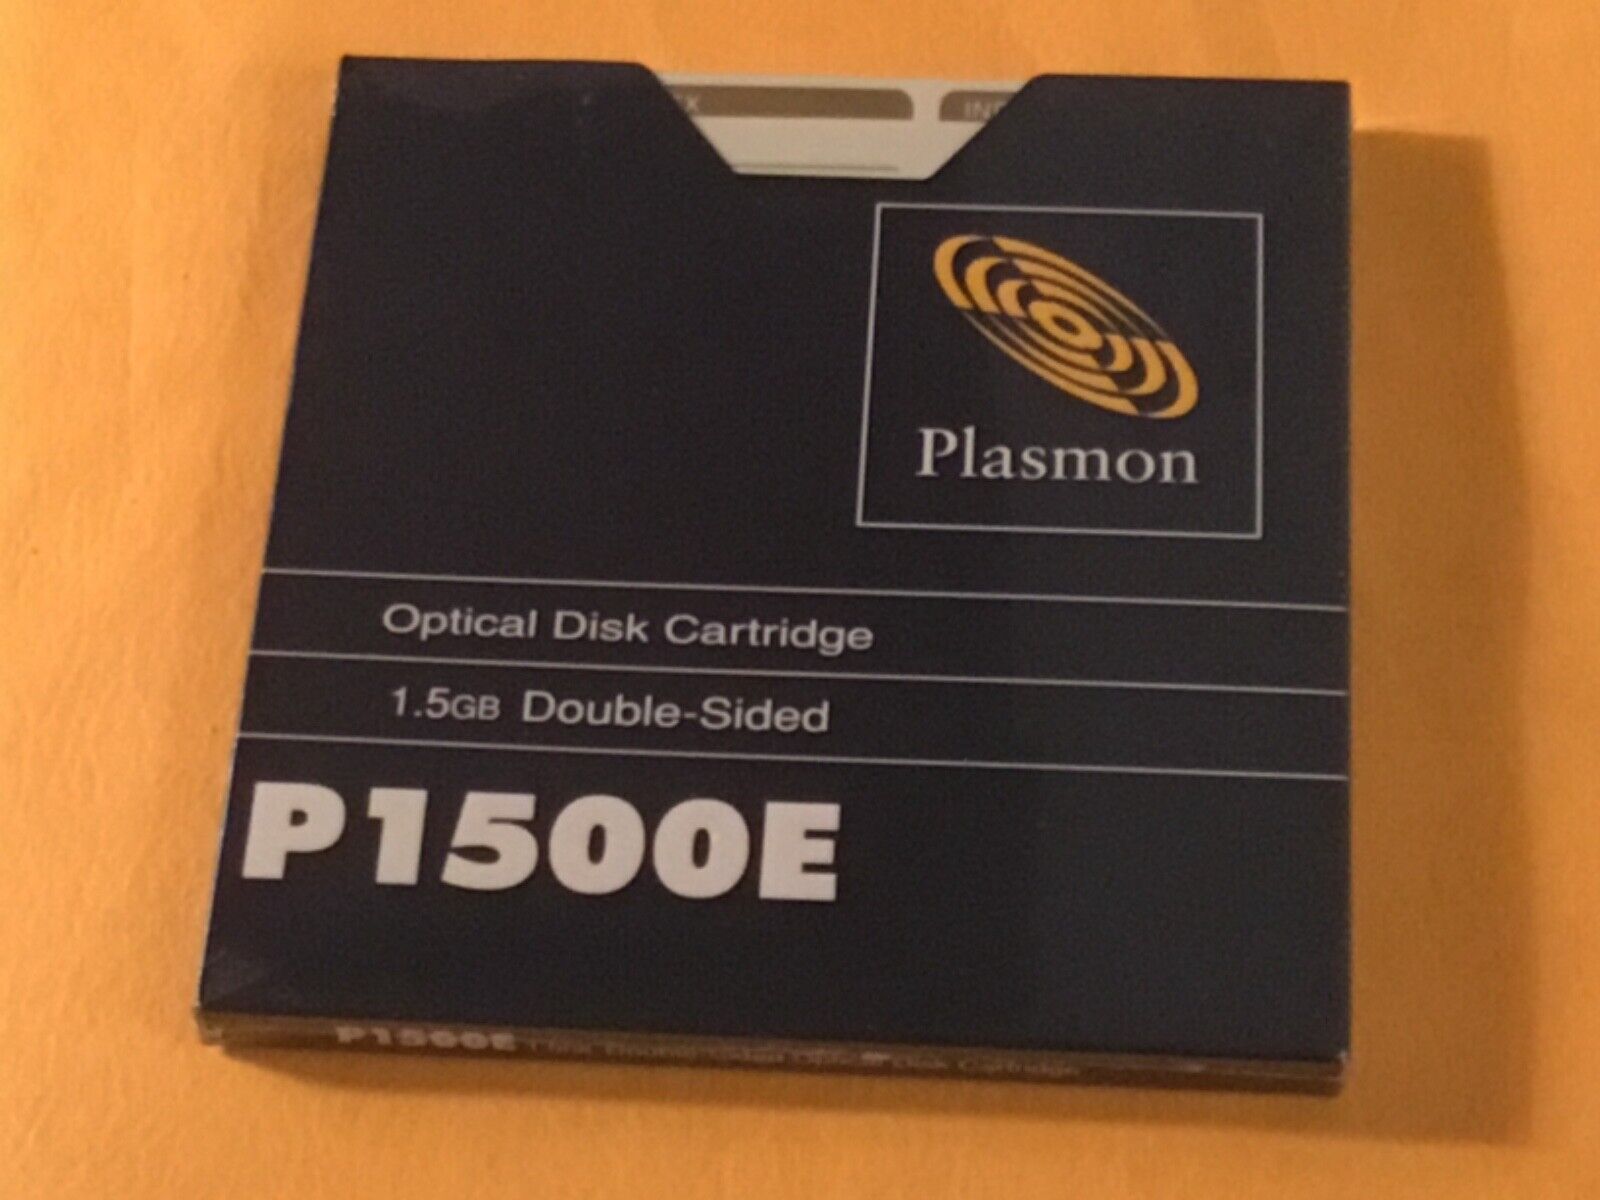 New Lot of 23 Plasmon P1500E 5.25 Magneto Optical Disk 1.5gb RW 2 sided Plasmon P1500E